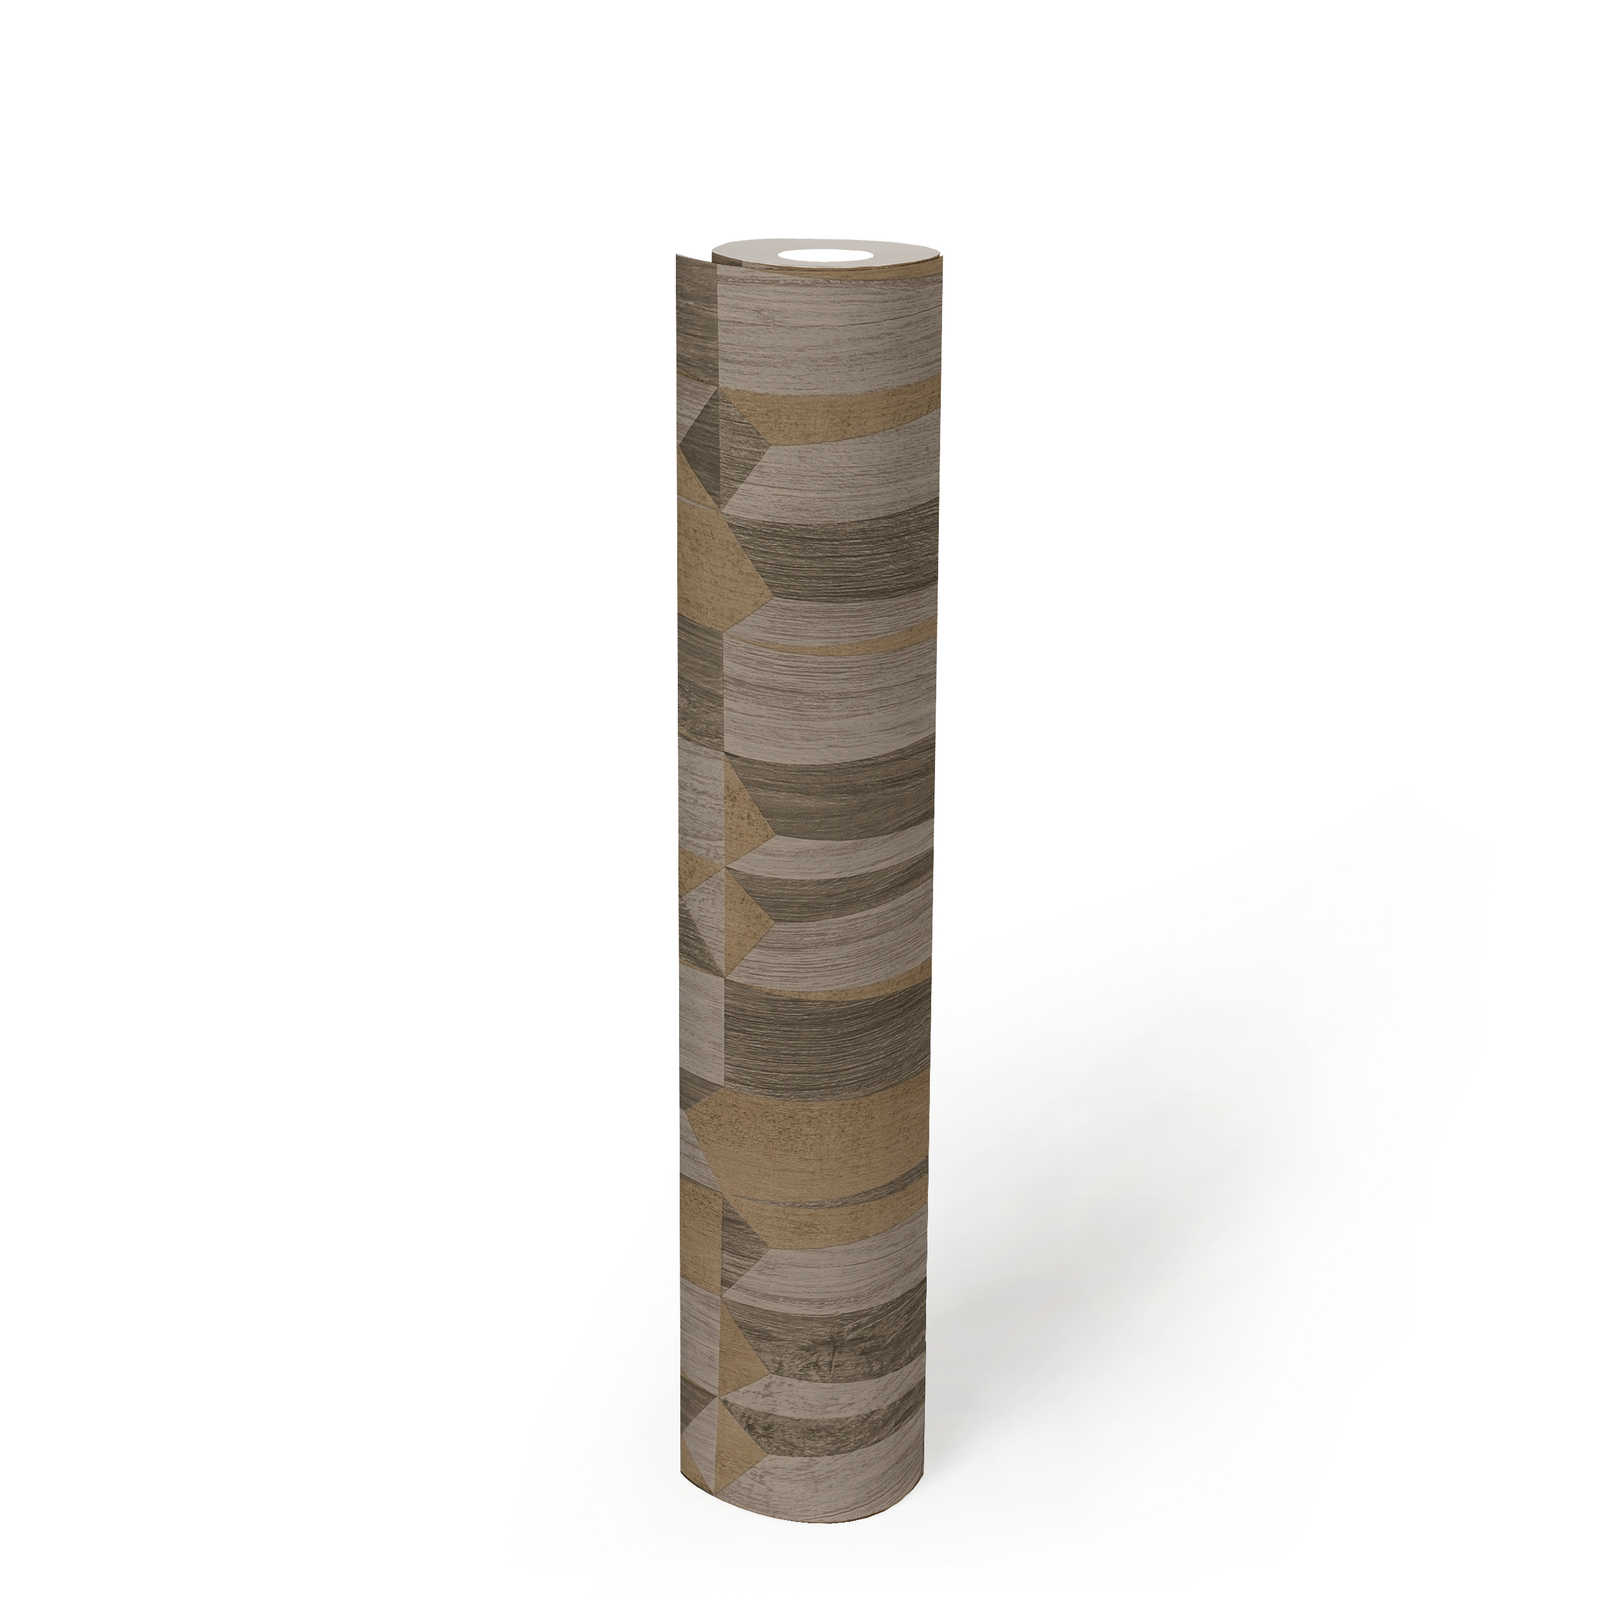             Ethno wallpaper with metallic & wood effect - brown, grey
        